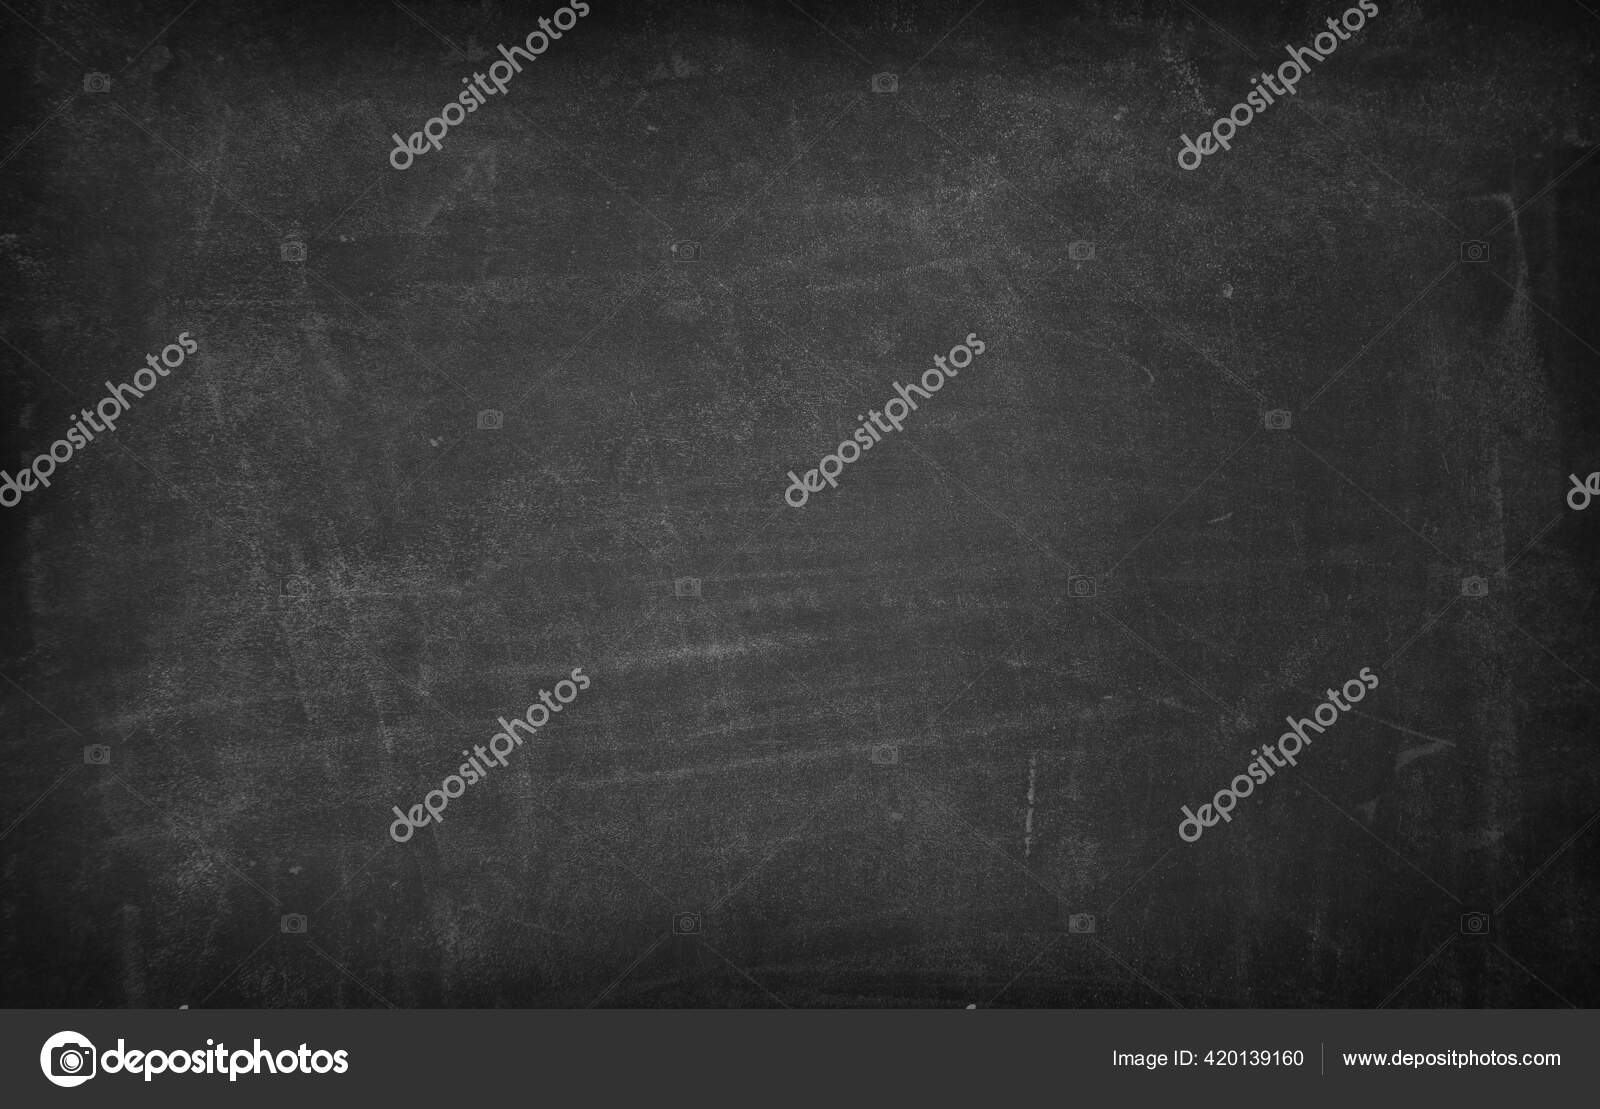 Chalk Rubbed Out Blackboard Background Stock Photo by ©stillfx 597611646